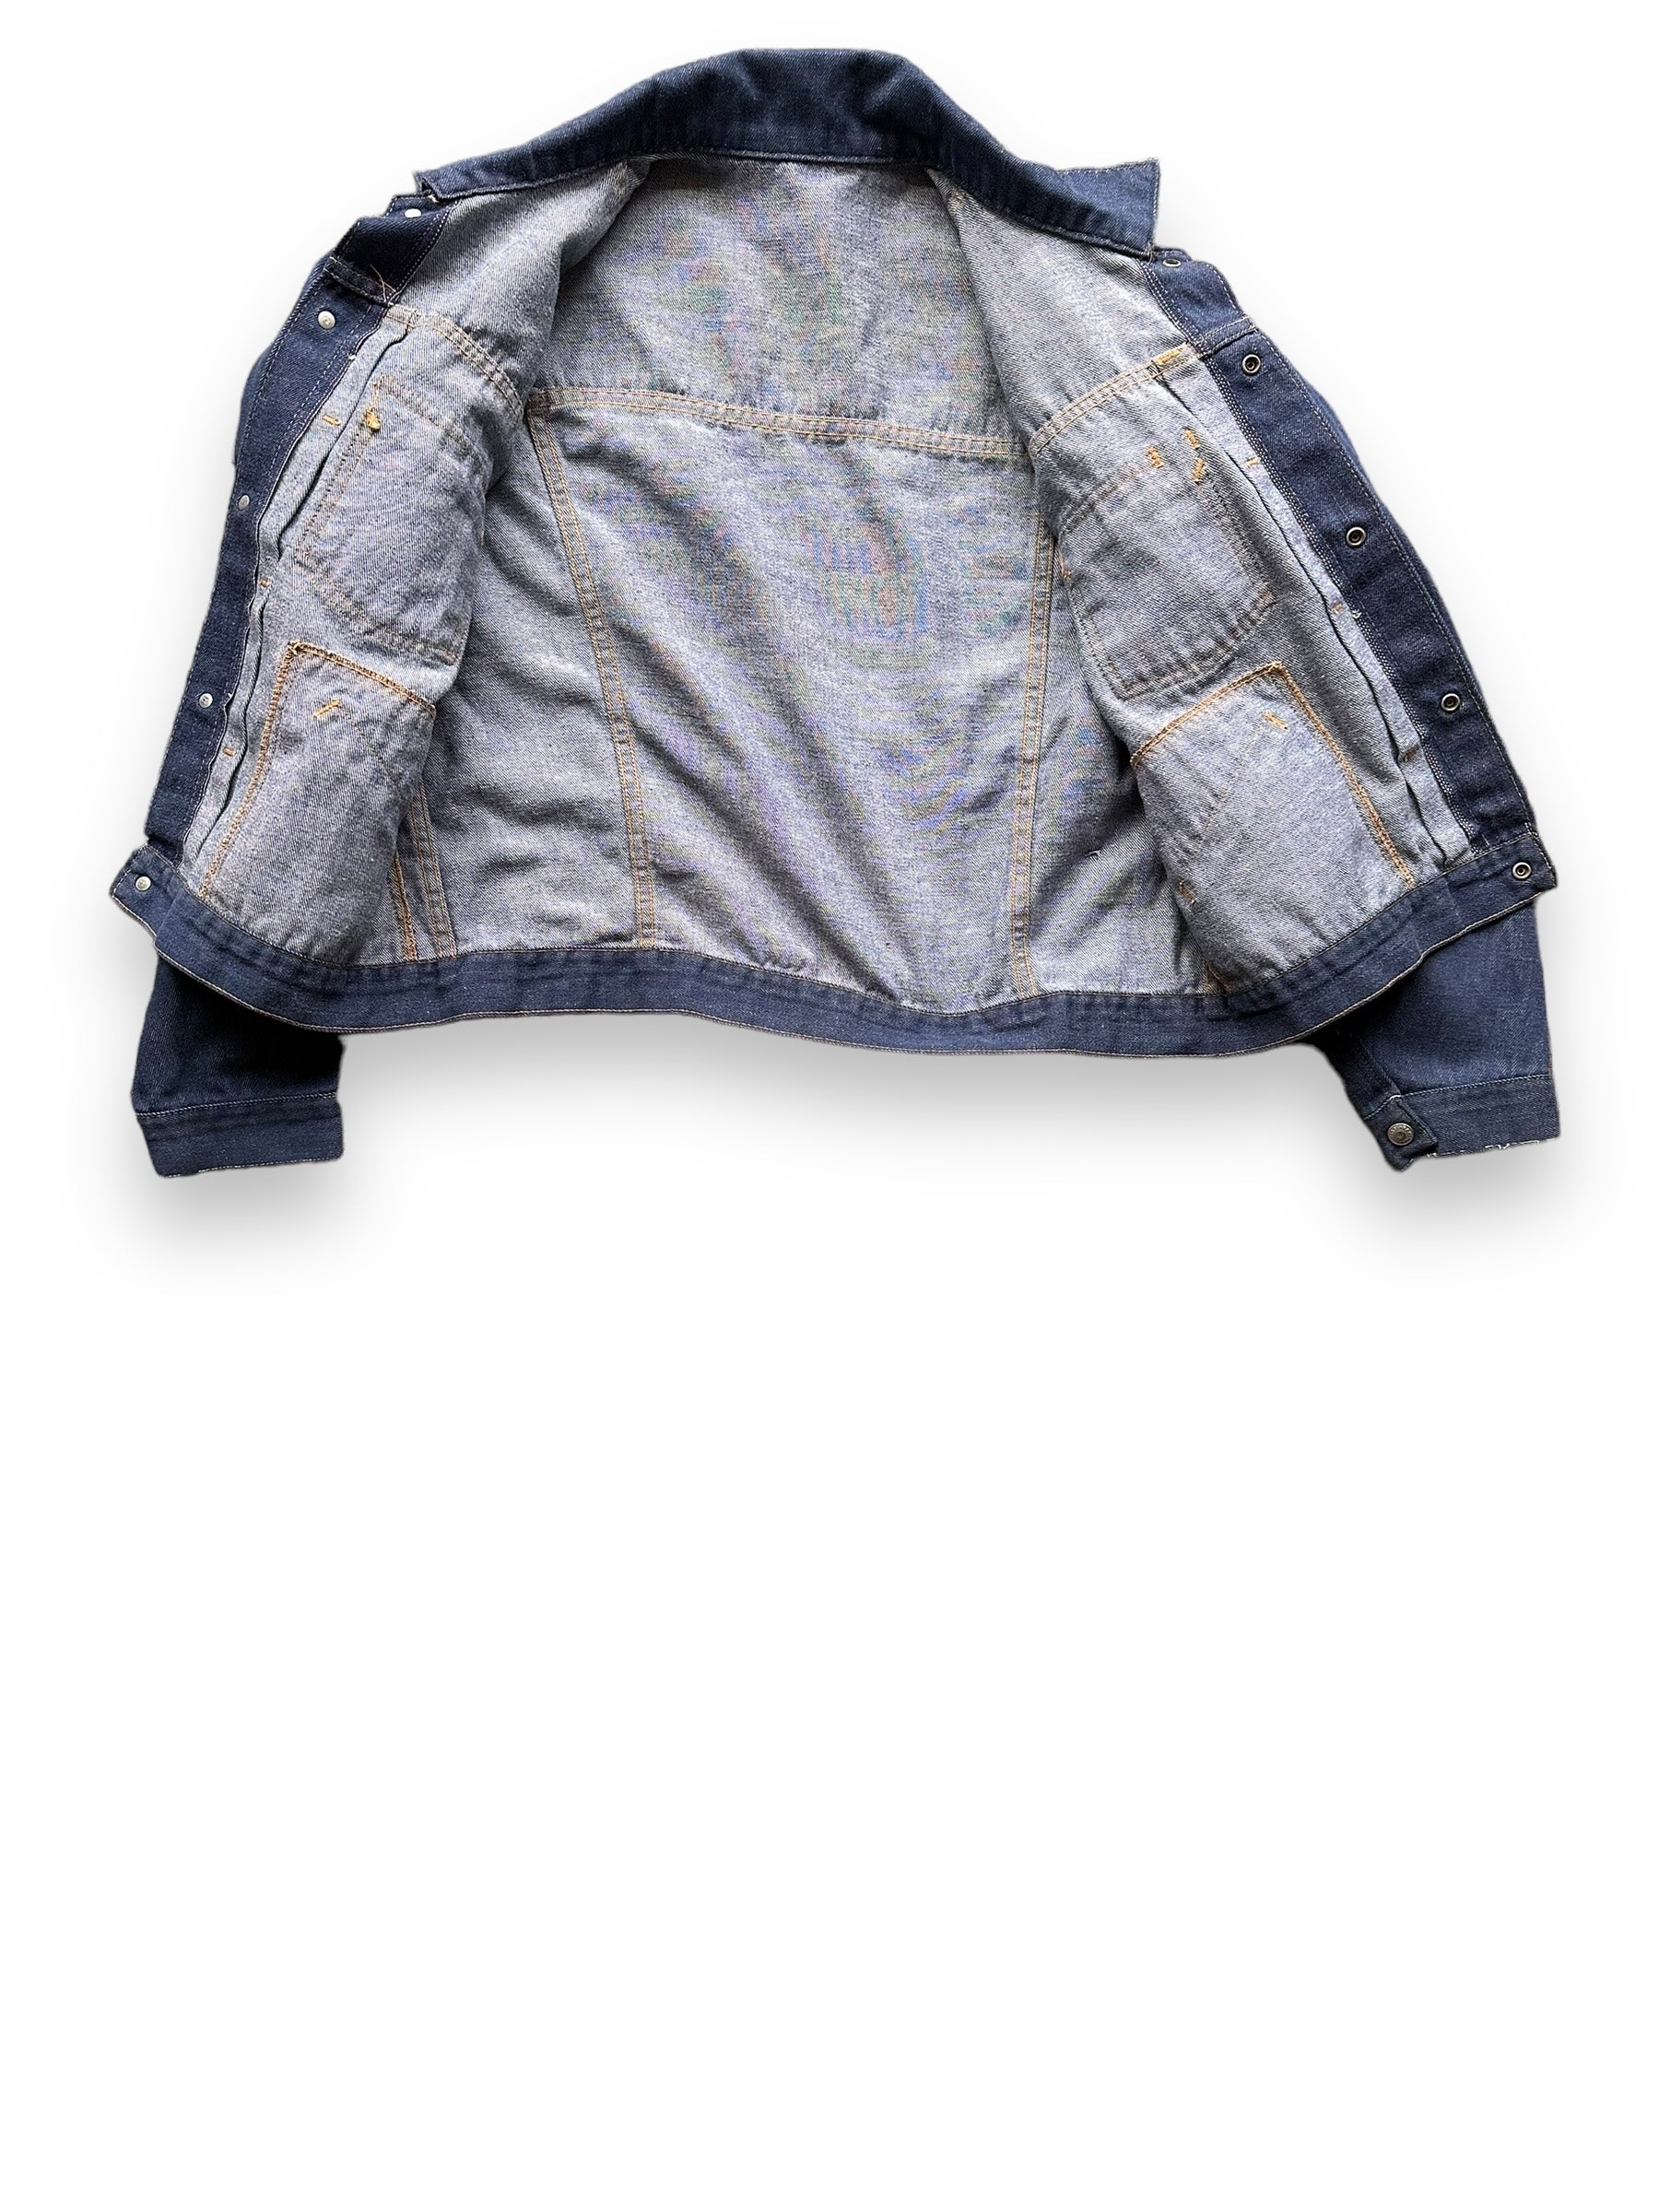 Liner View of Vintage Ranchcraft Selvedge Denim Jacket SZ L | Vintage Denim Workwear Seattle | Seattle Vintage Denim